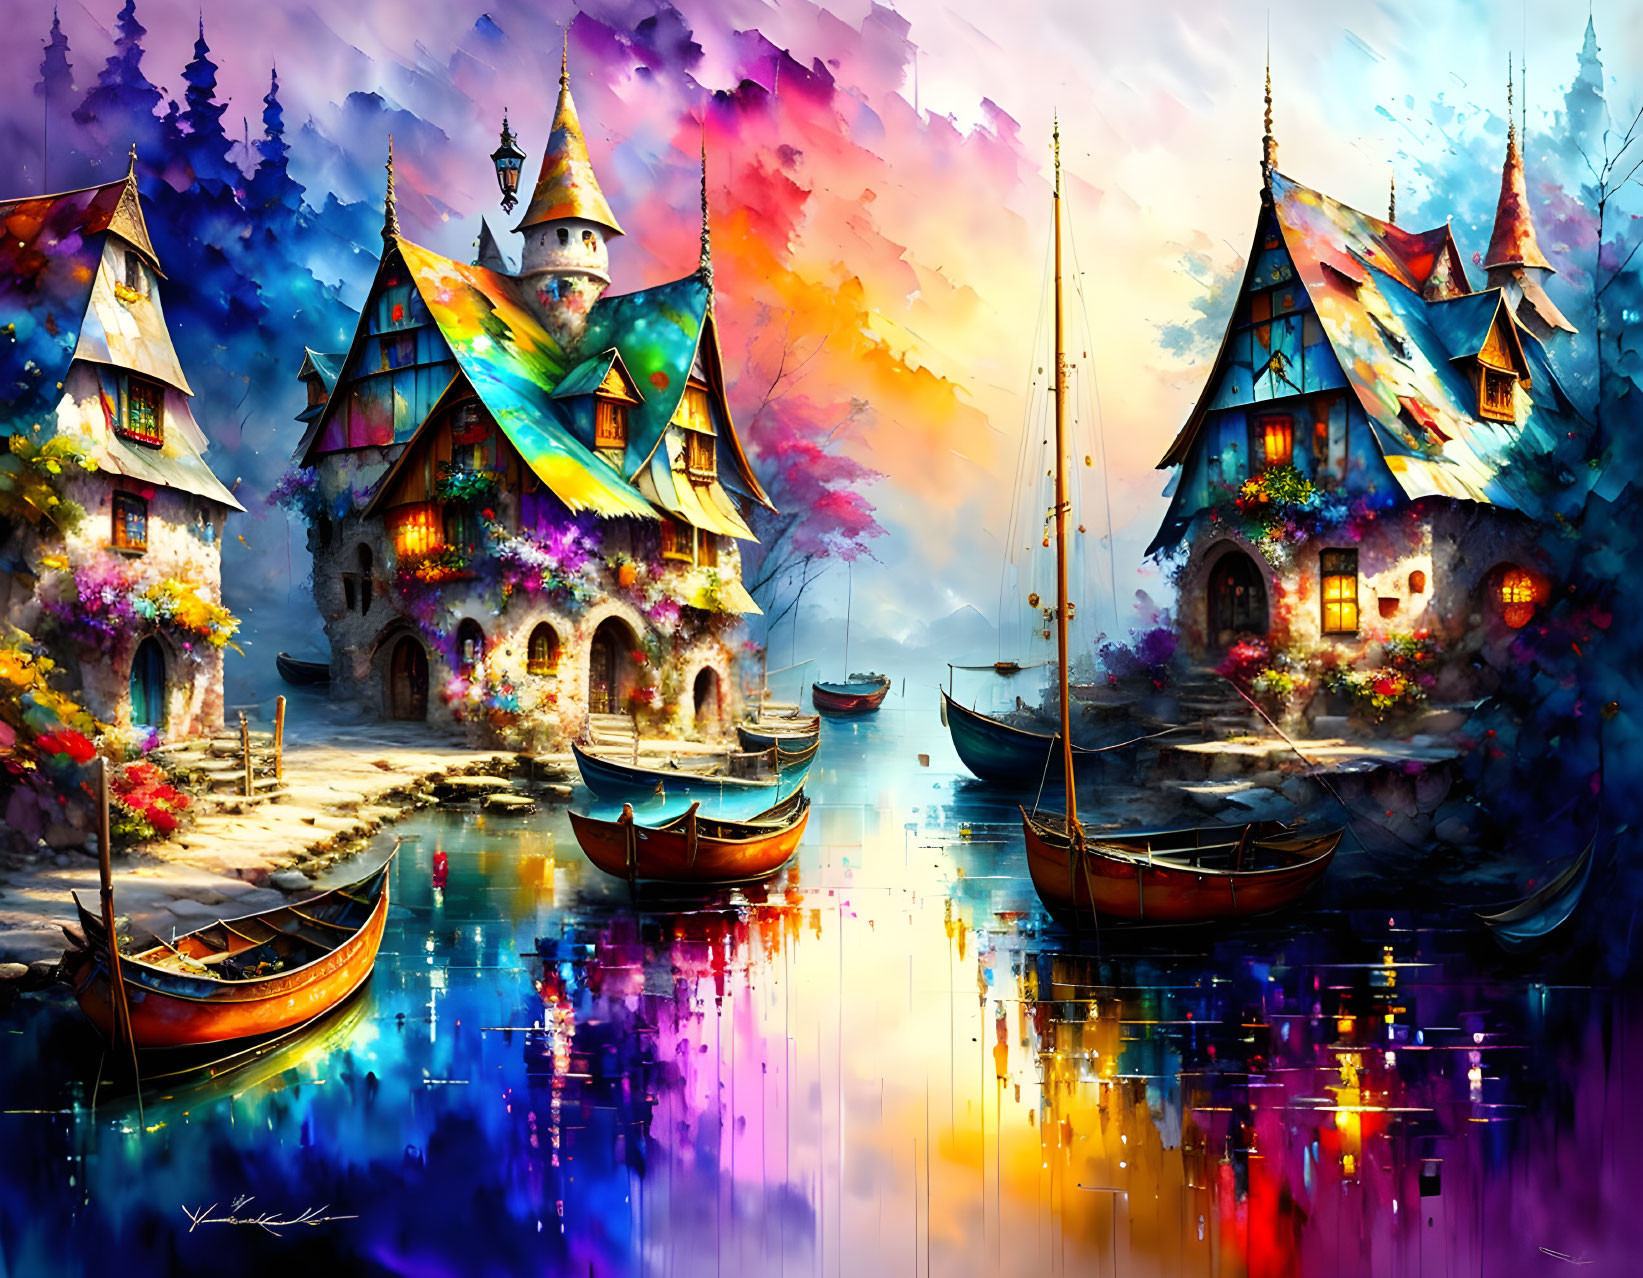 Fantasy fisher's village